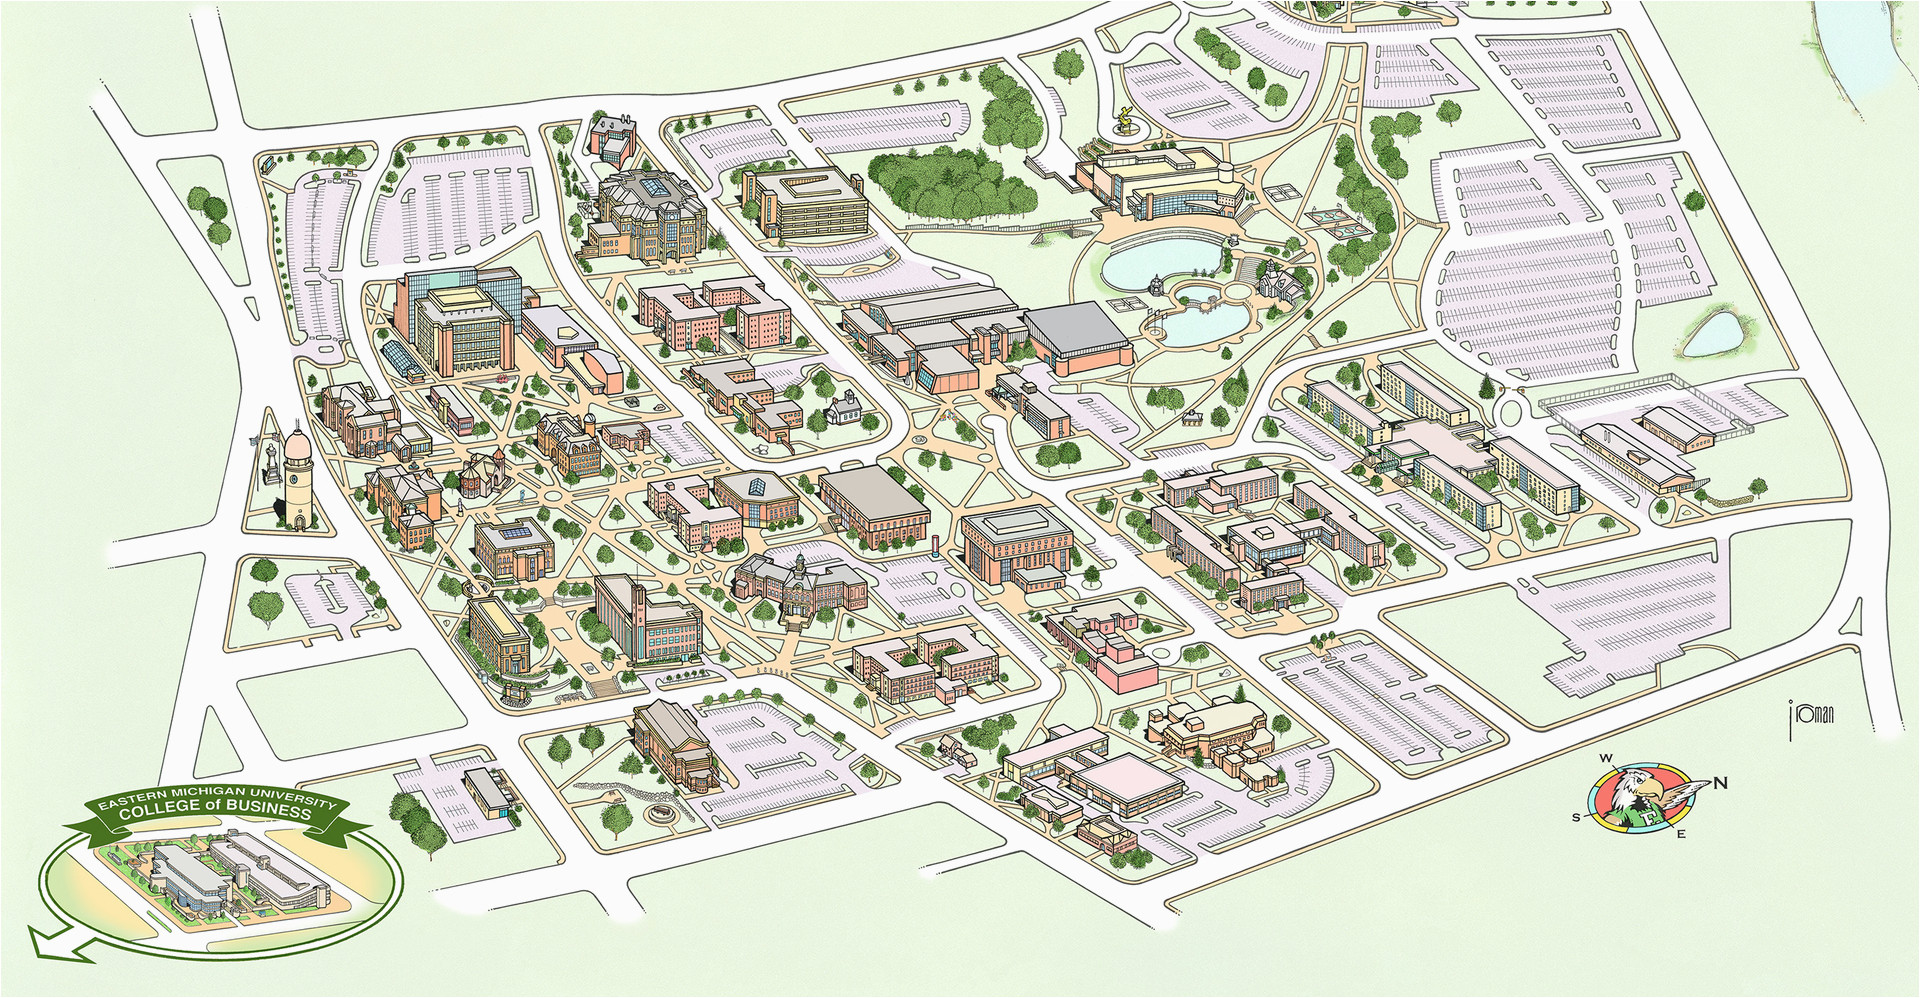 Eastern Michigan University Campus Map Campus Maps